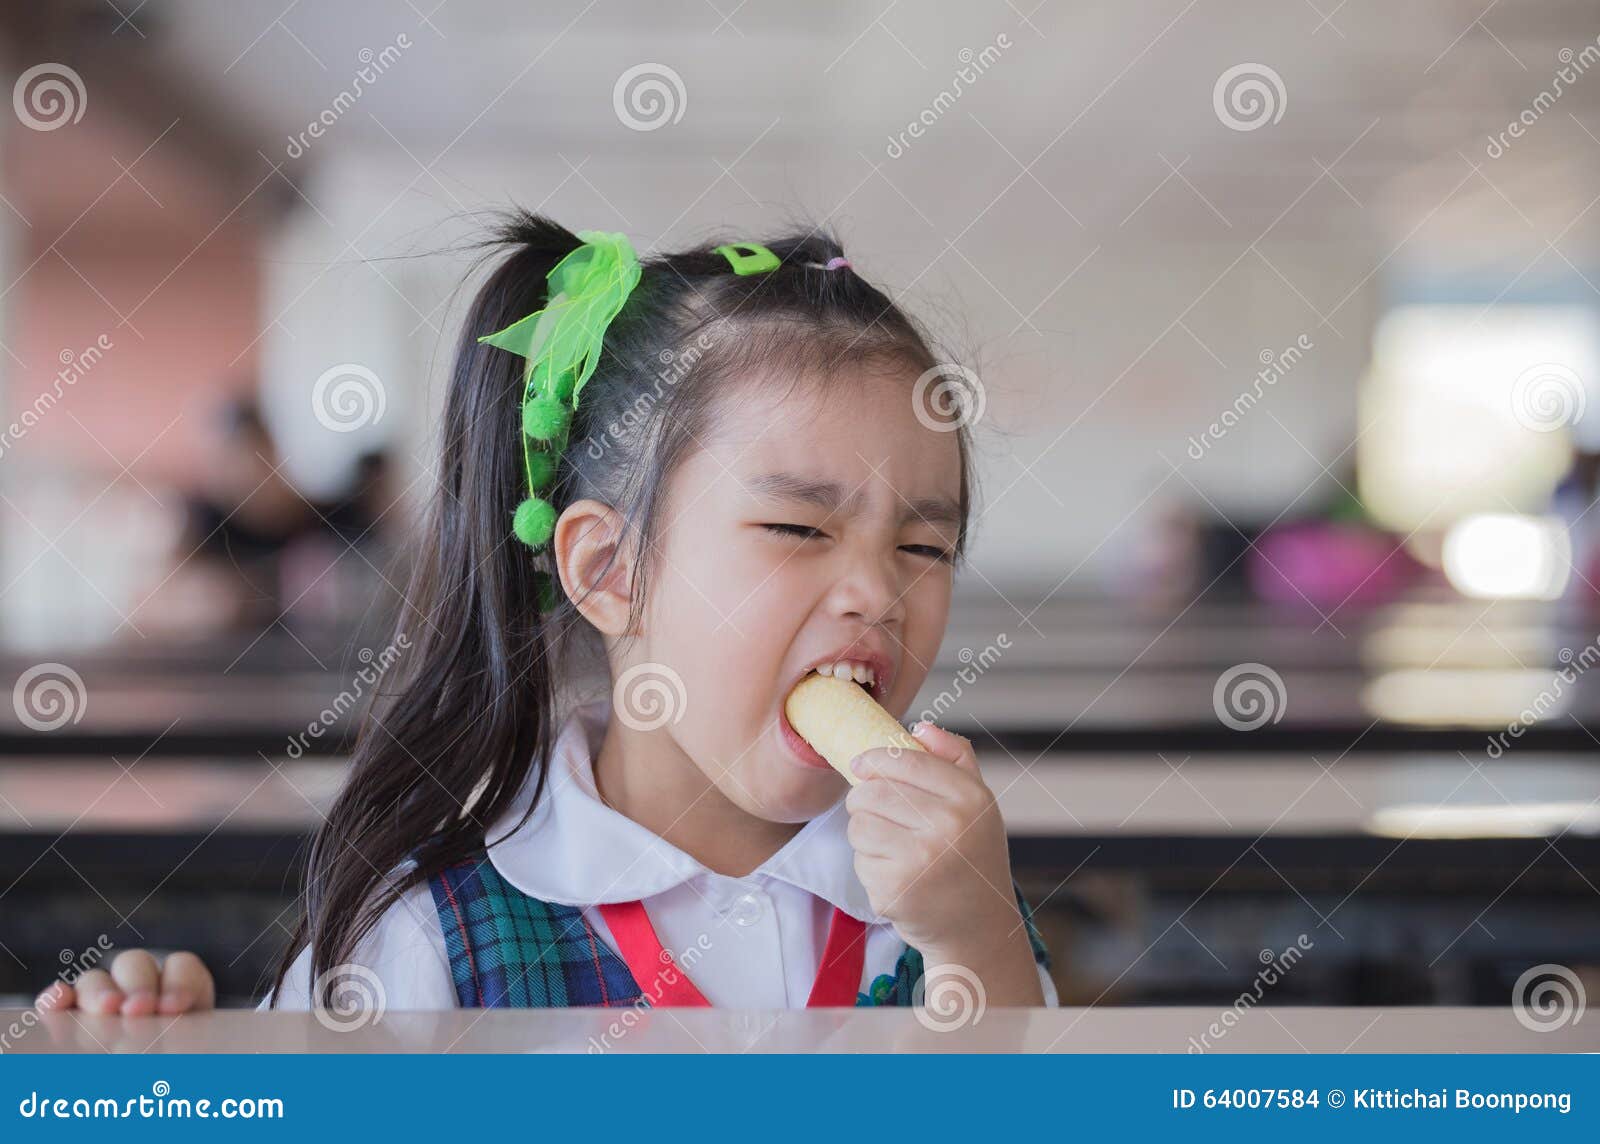 students eat snacks